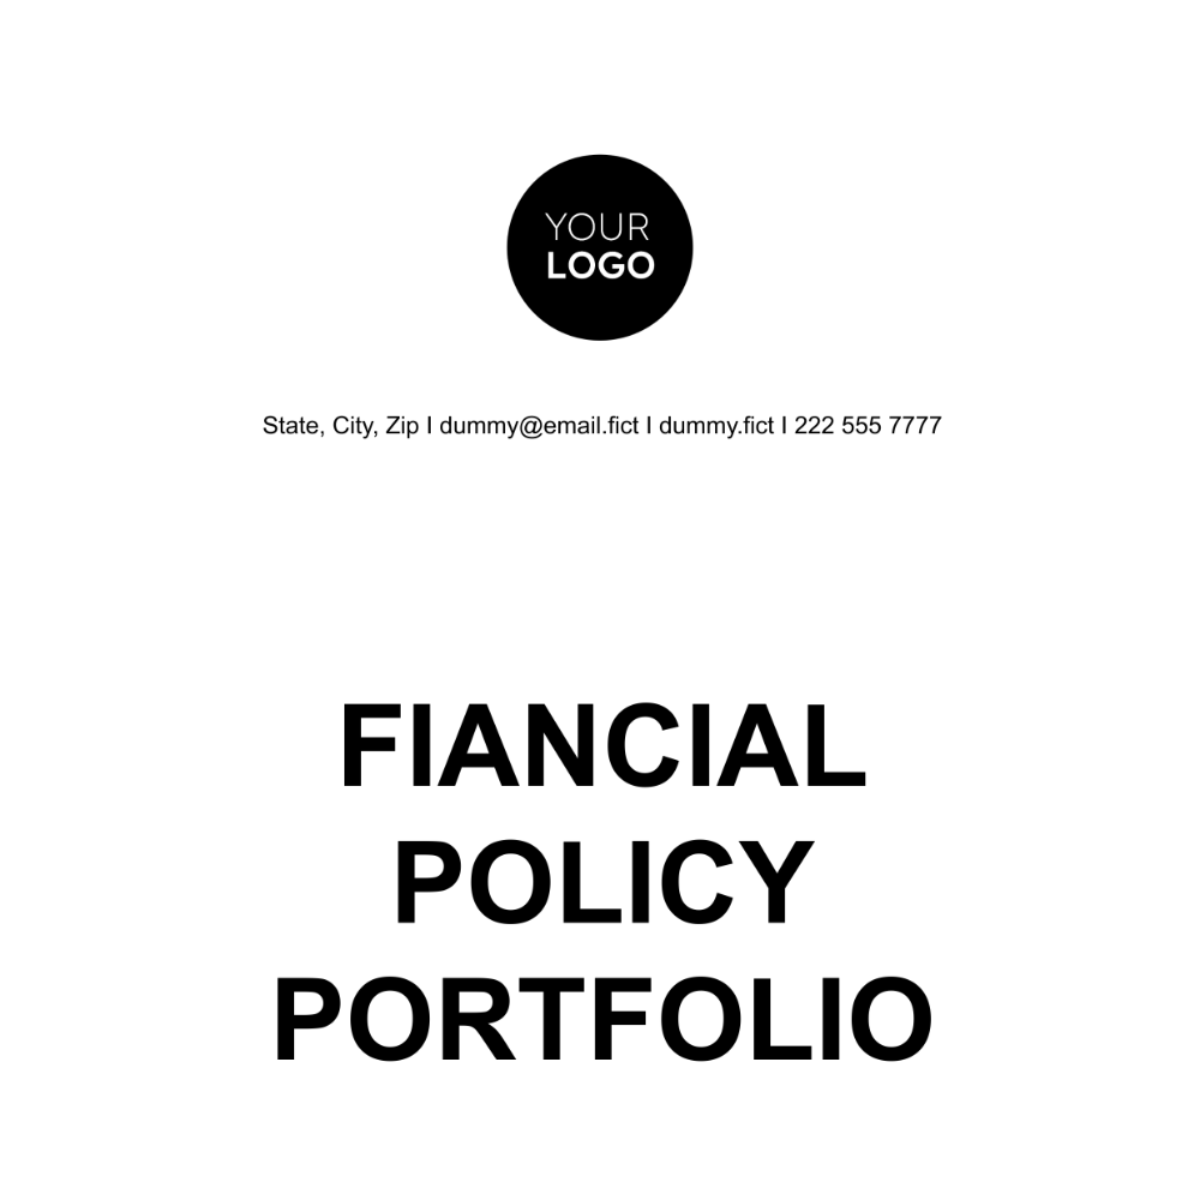 Free Financial Policy Portfolio Template